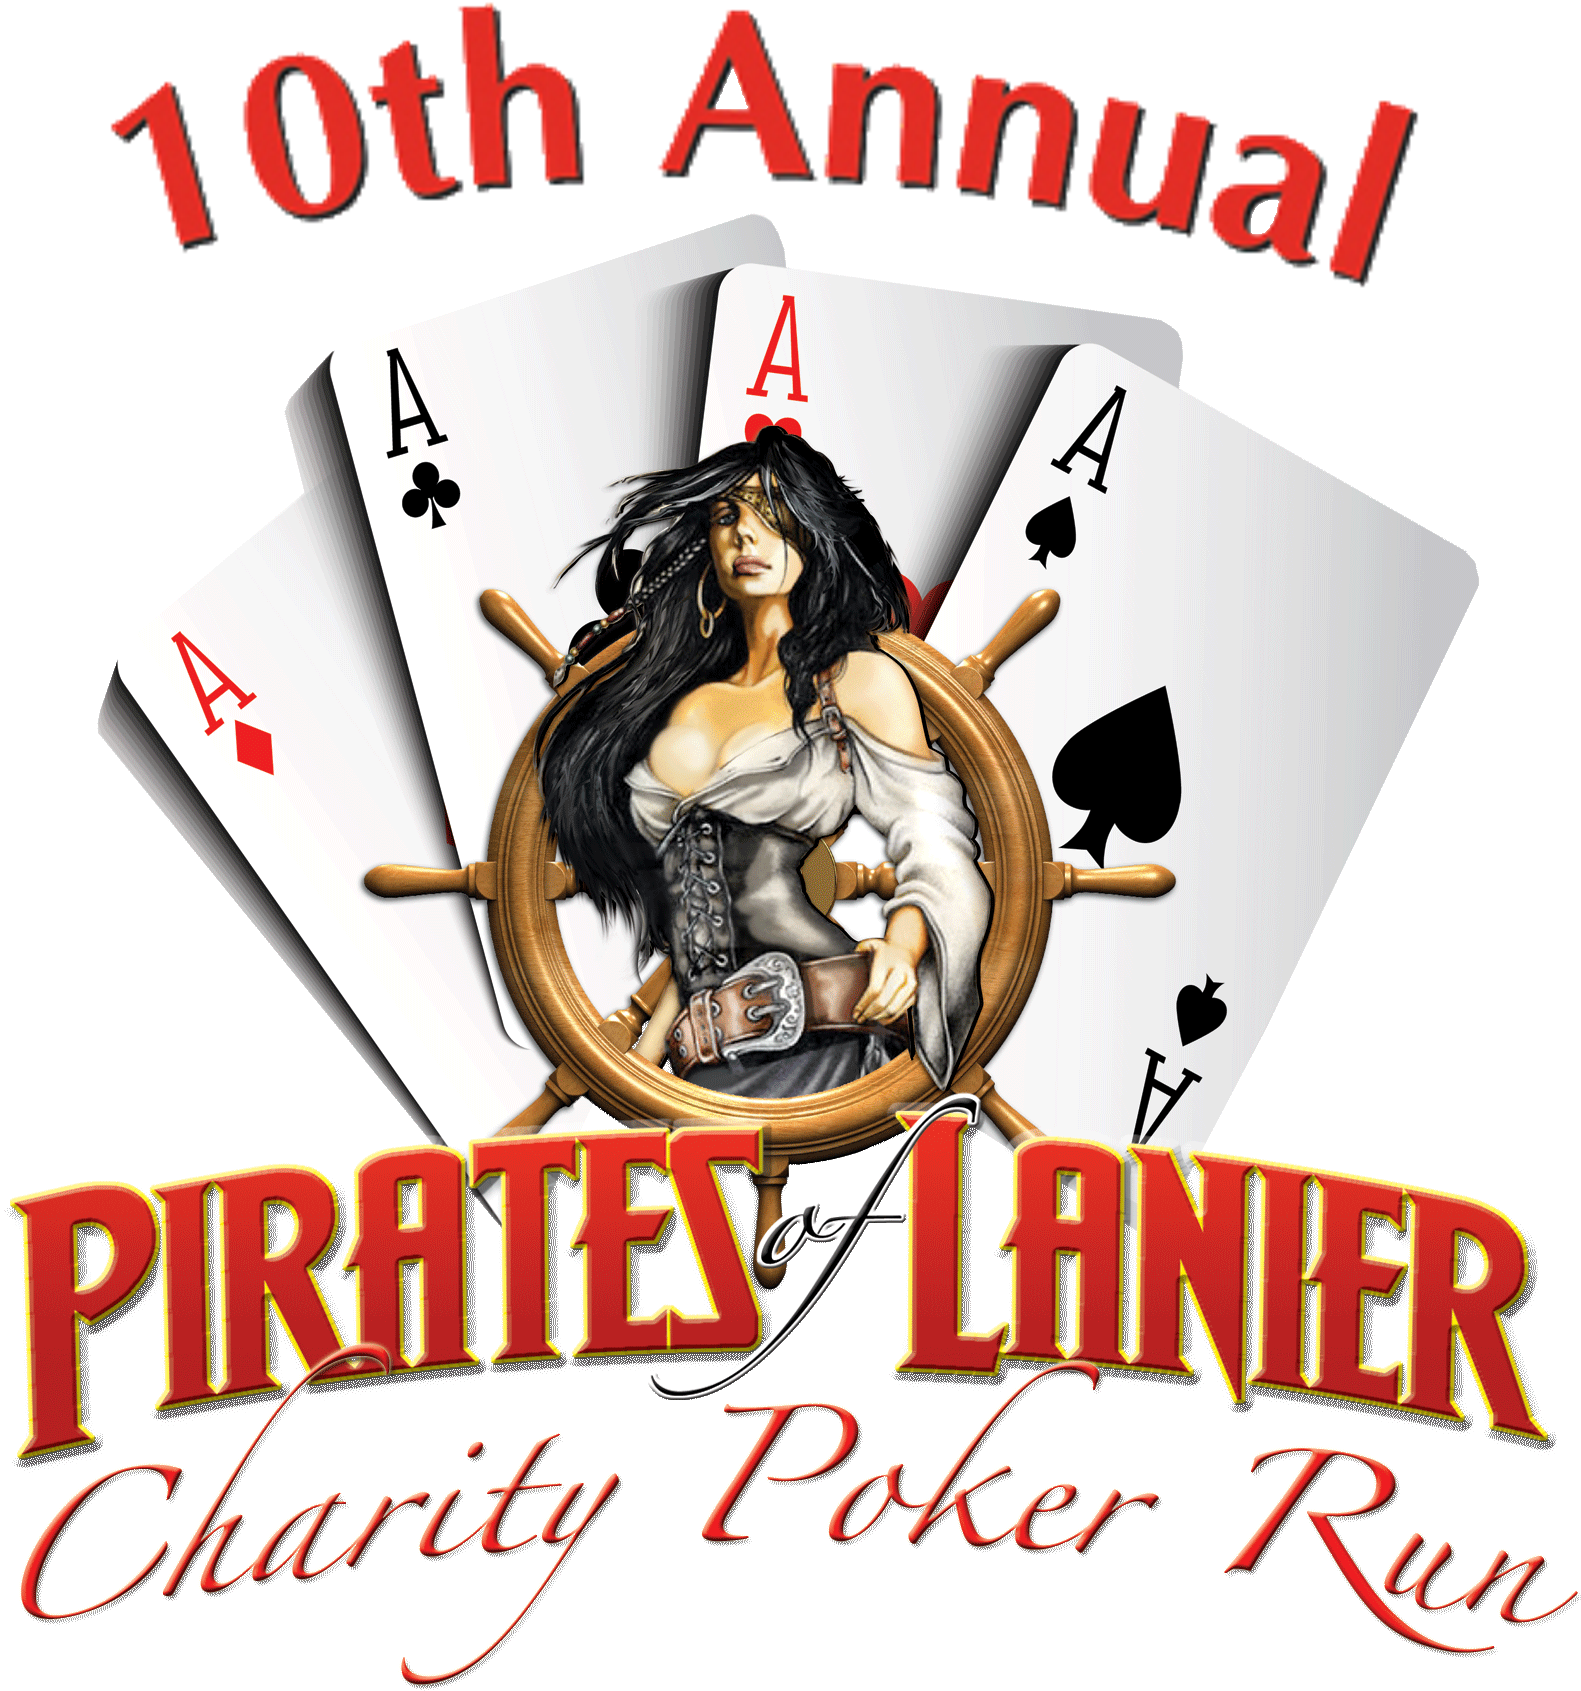 1000 island charity poker run facebook